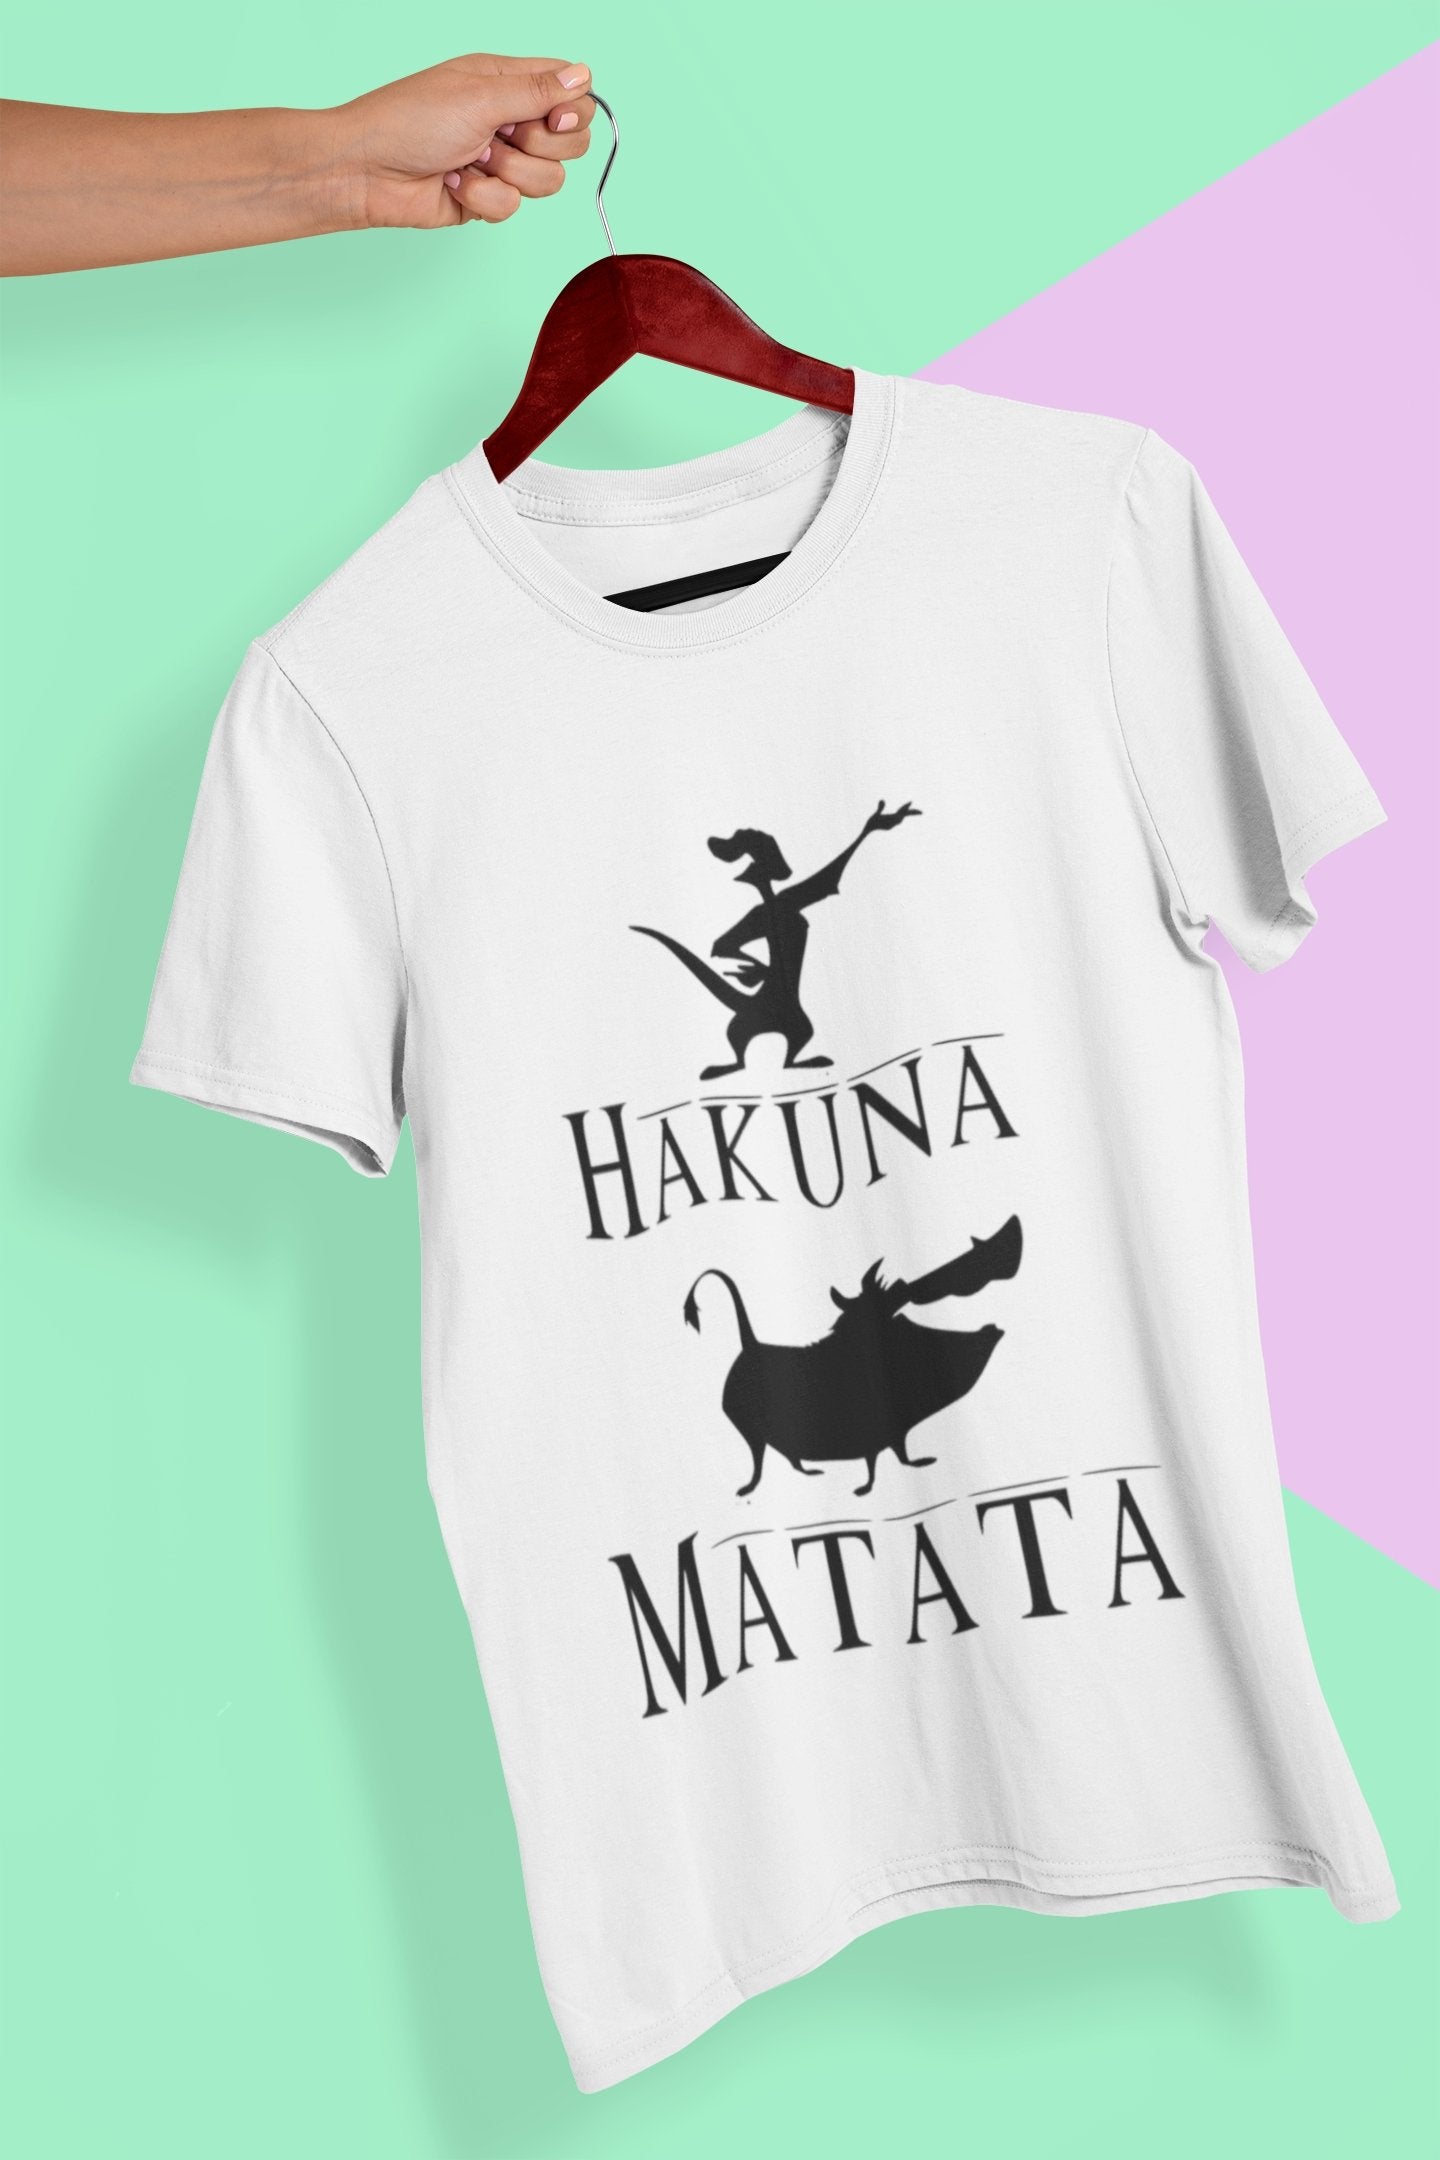 The Lion King - Hakuna Matata - Insane Tees